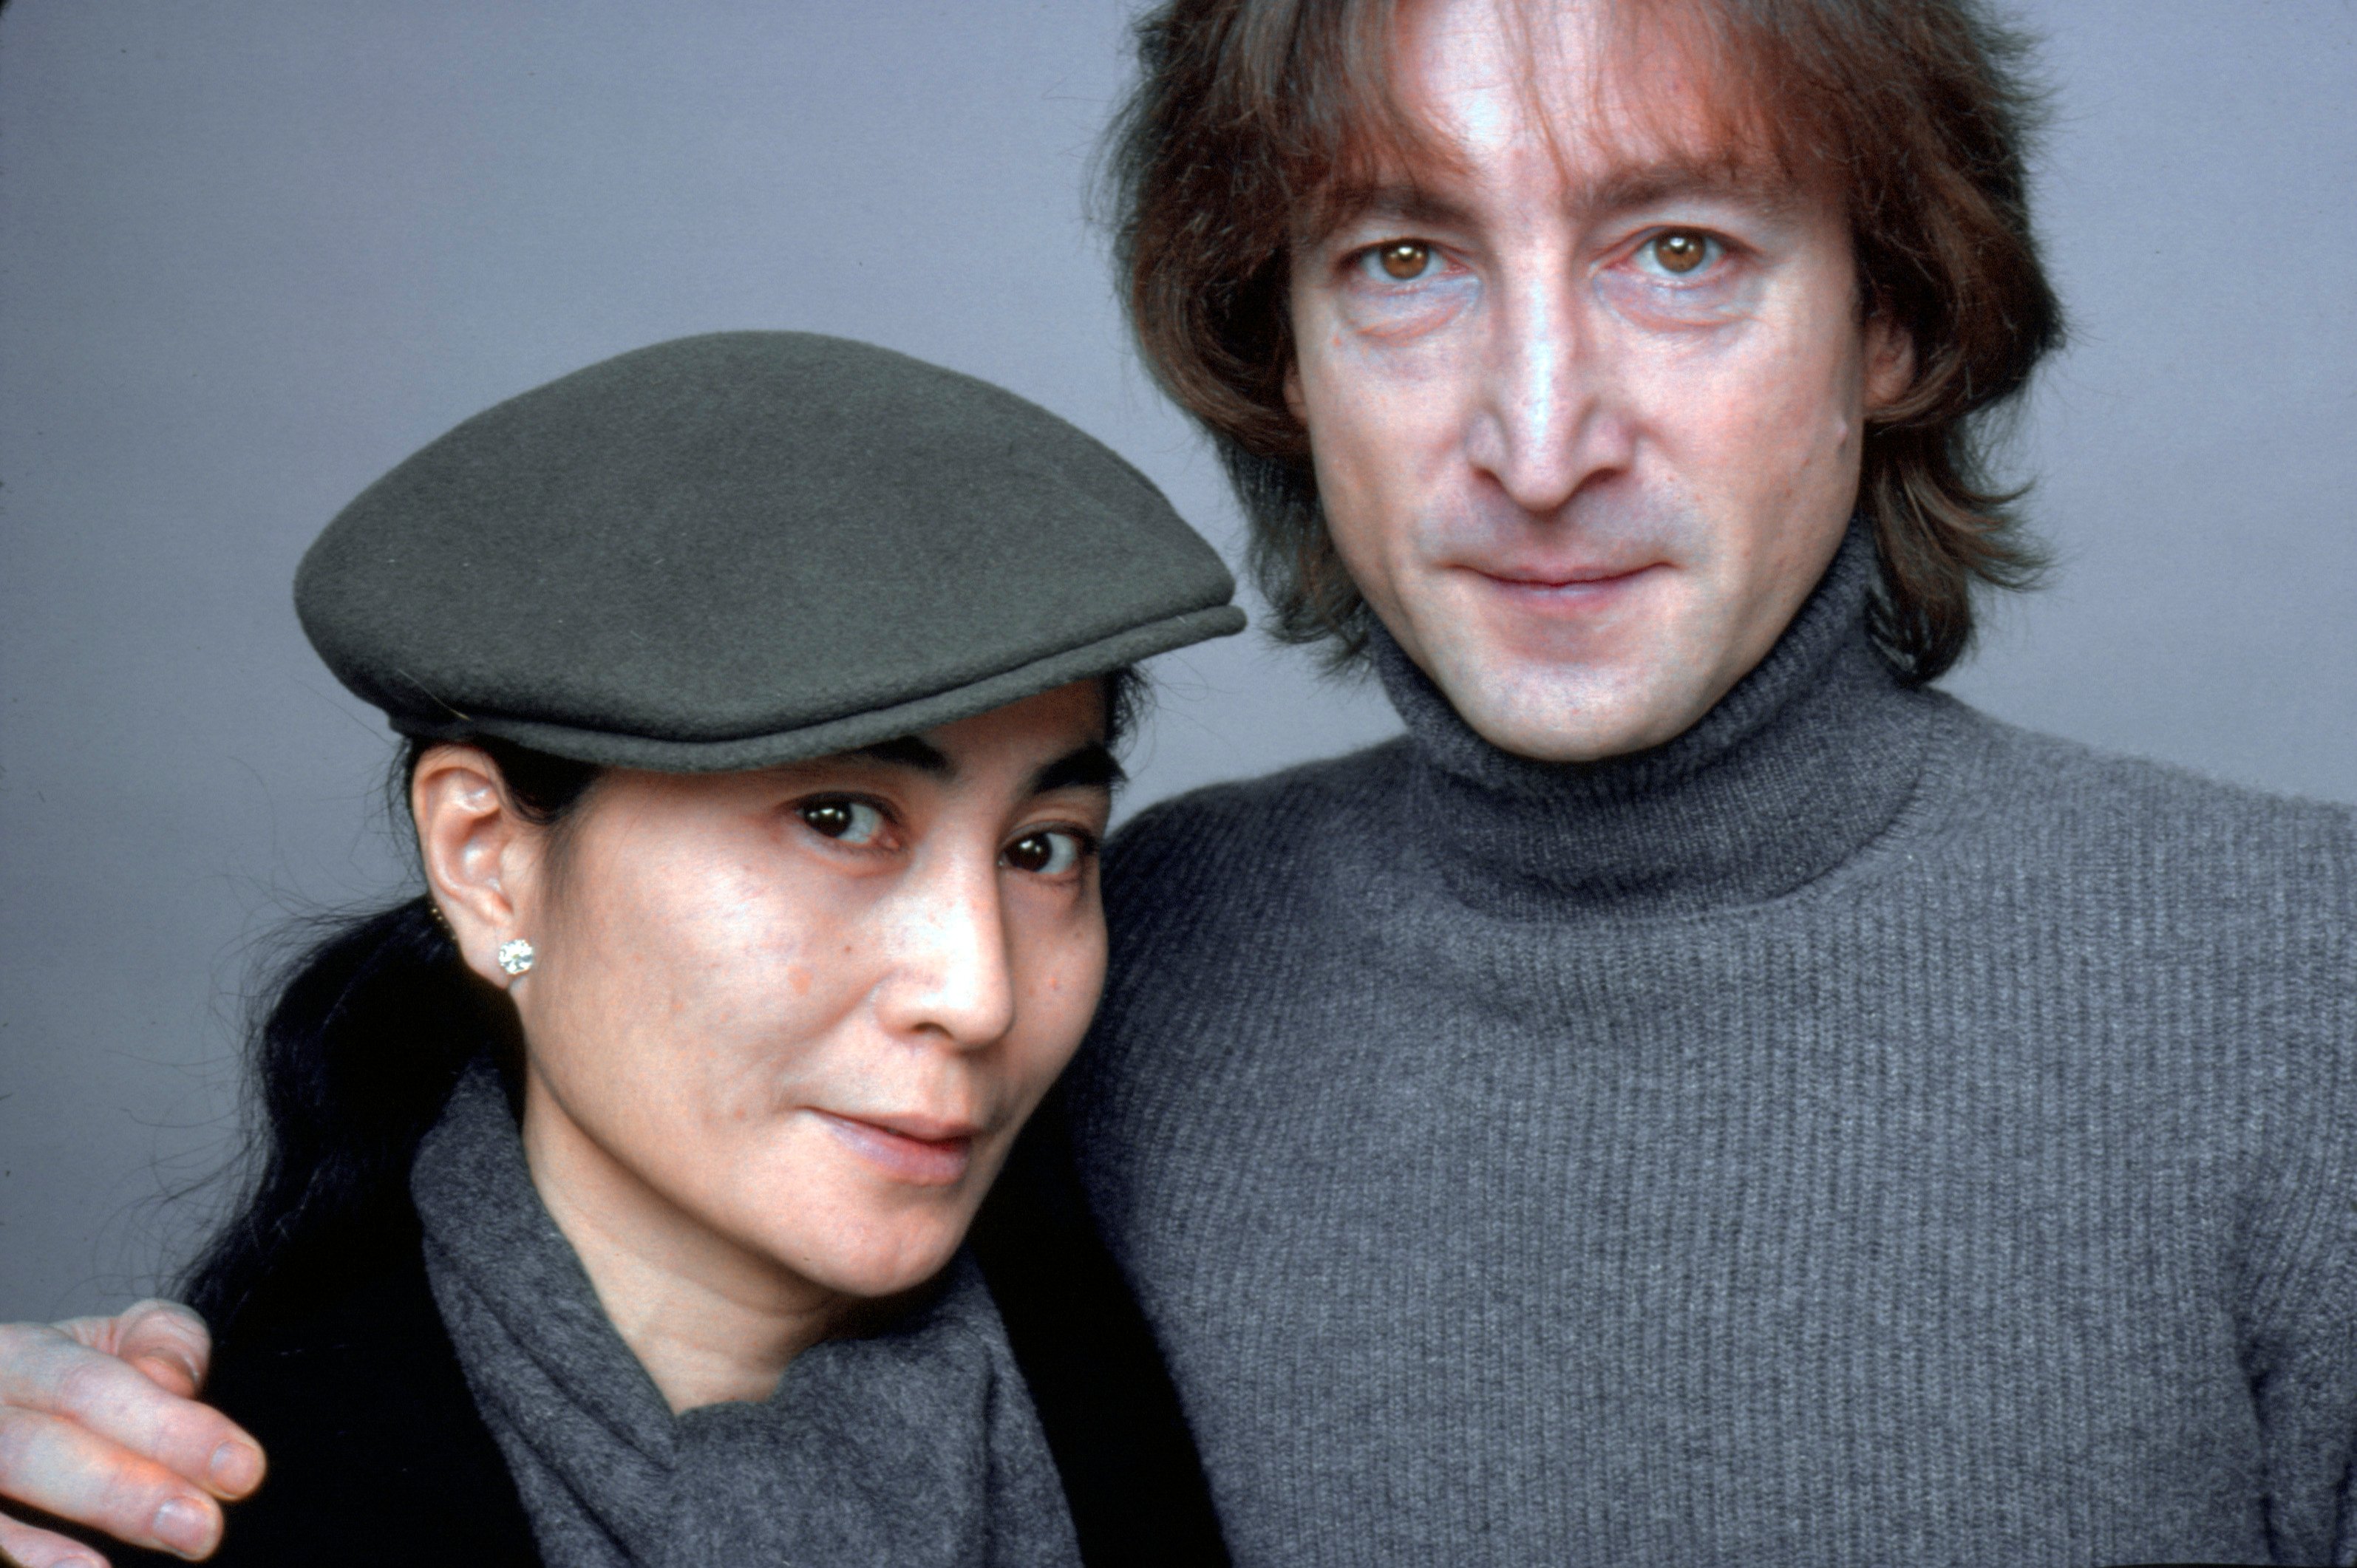 John Lennon putting his hand on Yoko Ono